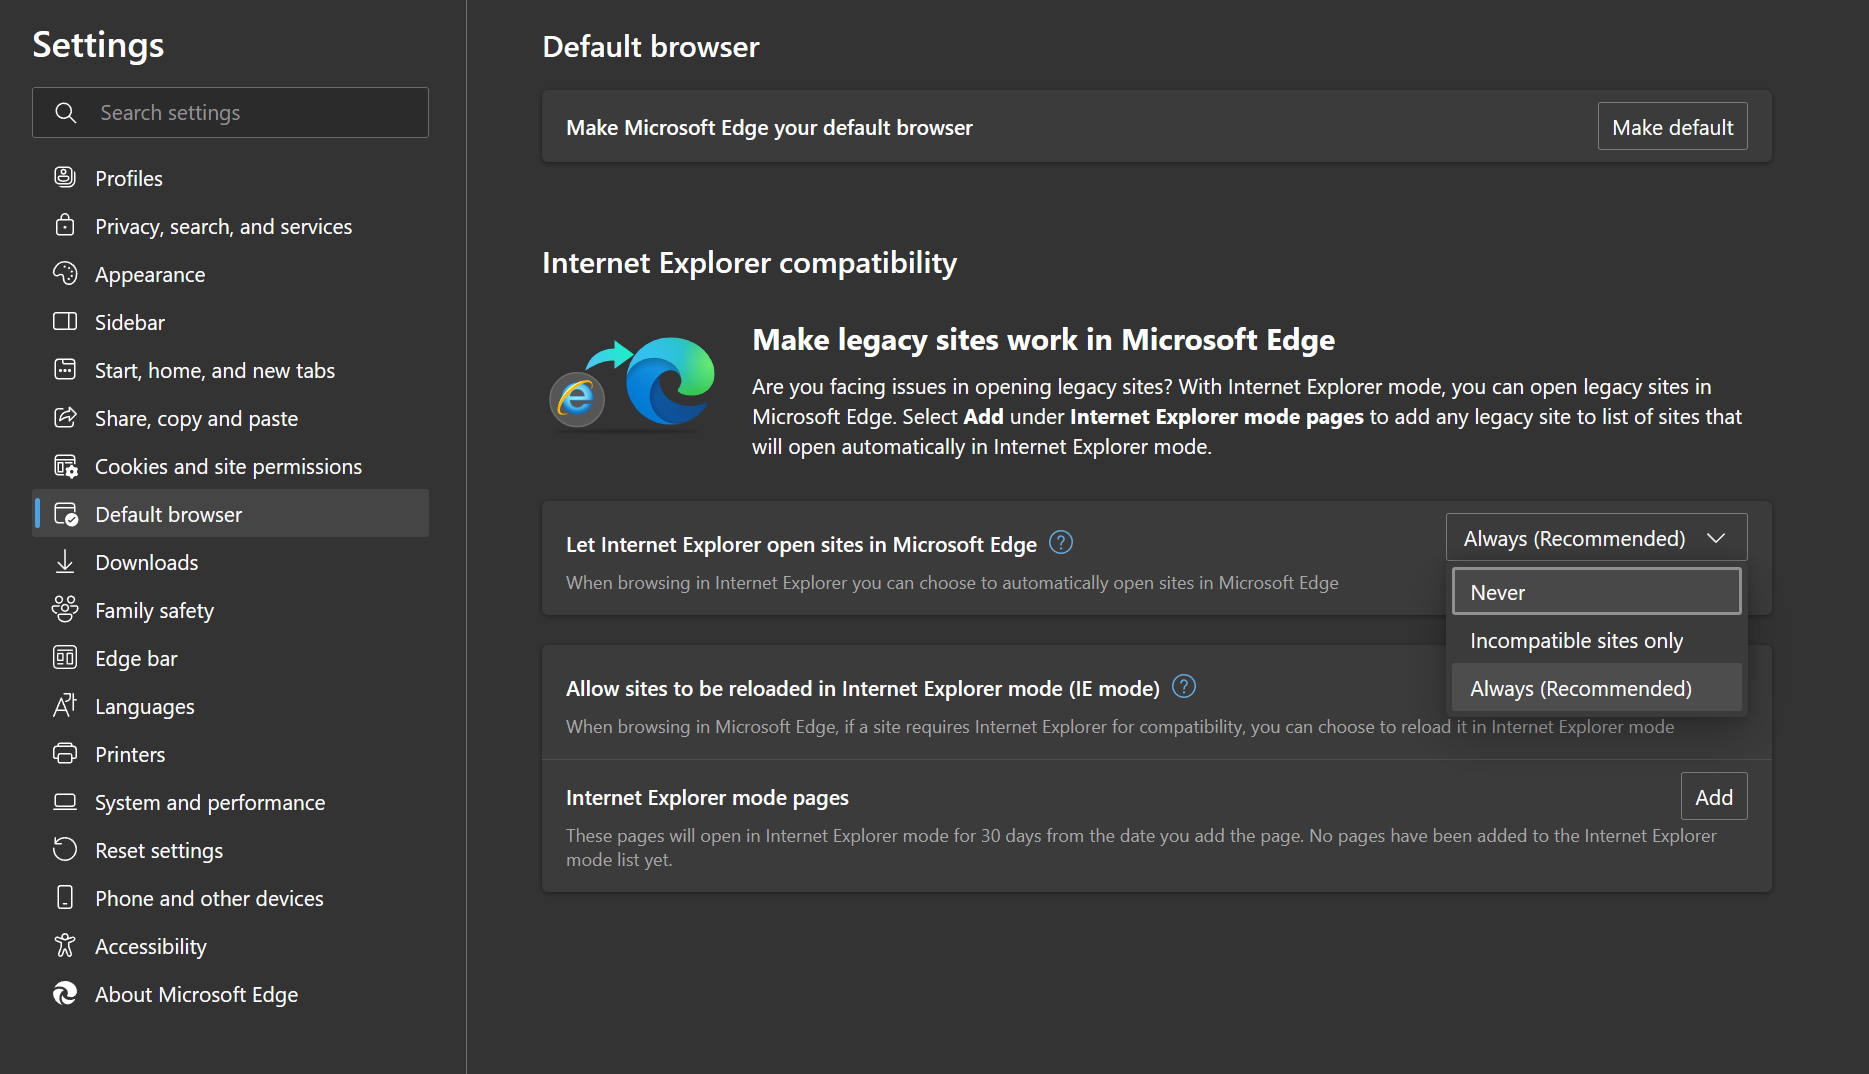 "Let Internet Explorer open sites in Microsoft Edge" Setting